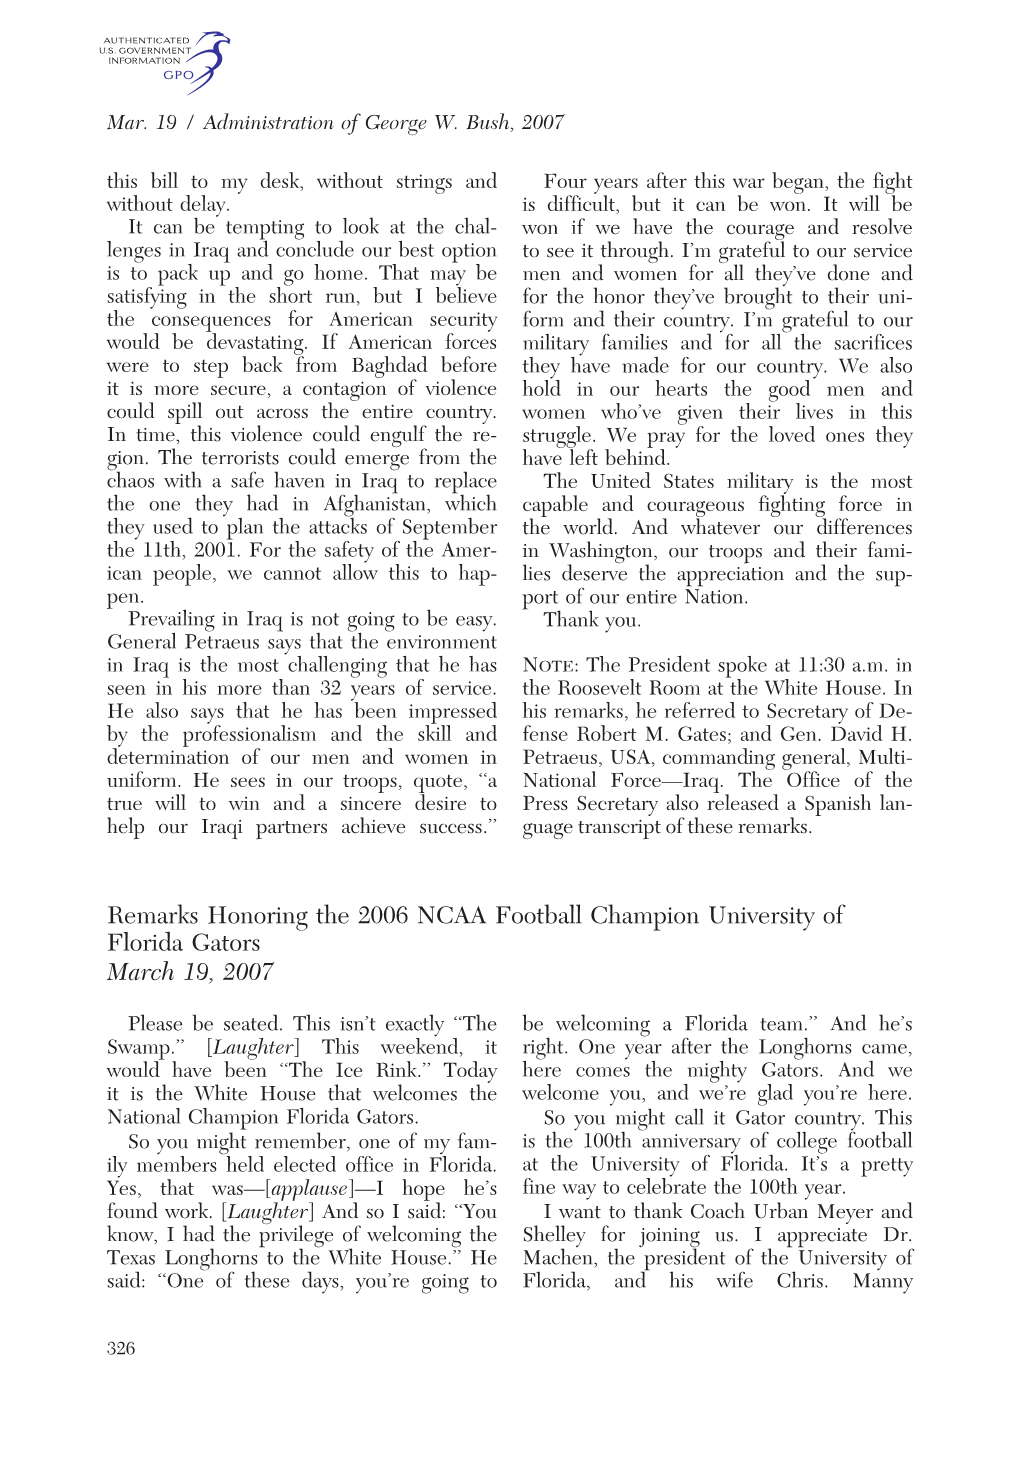 Remarks Honoring the 2006 NCAA Football Champion University of Florida Gators March 19, 2007